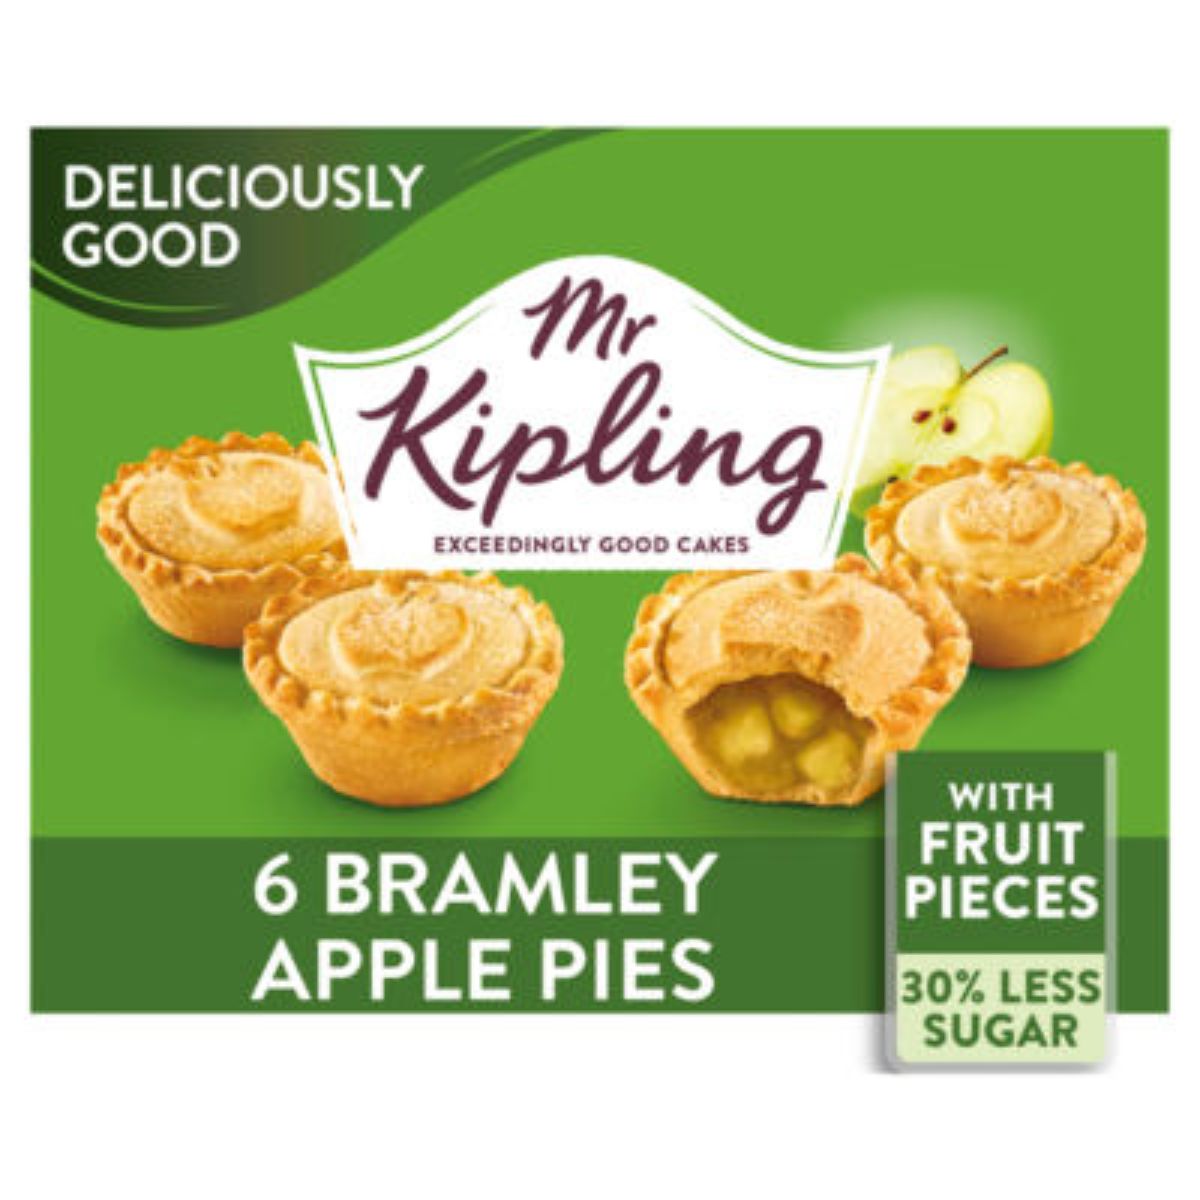 Mr Kipling - Bramley Apple Pies - 6pcs.